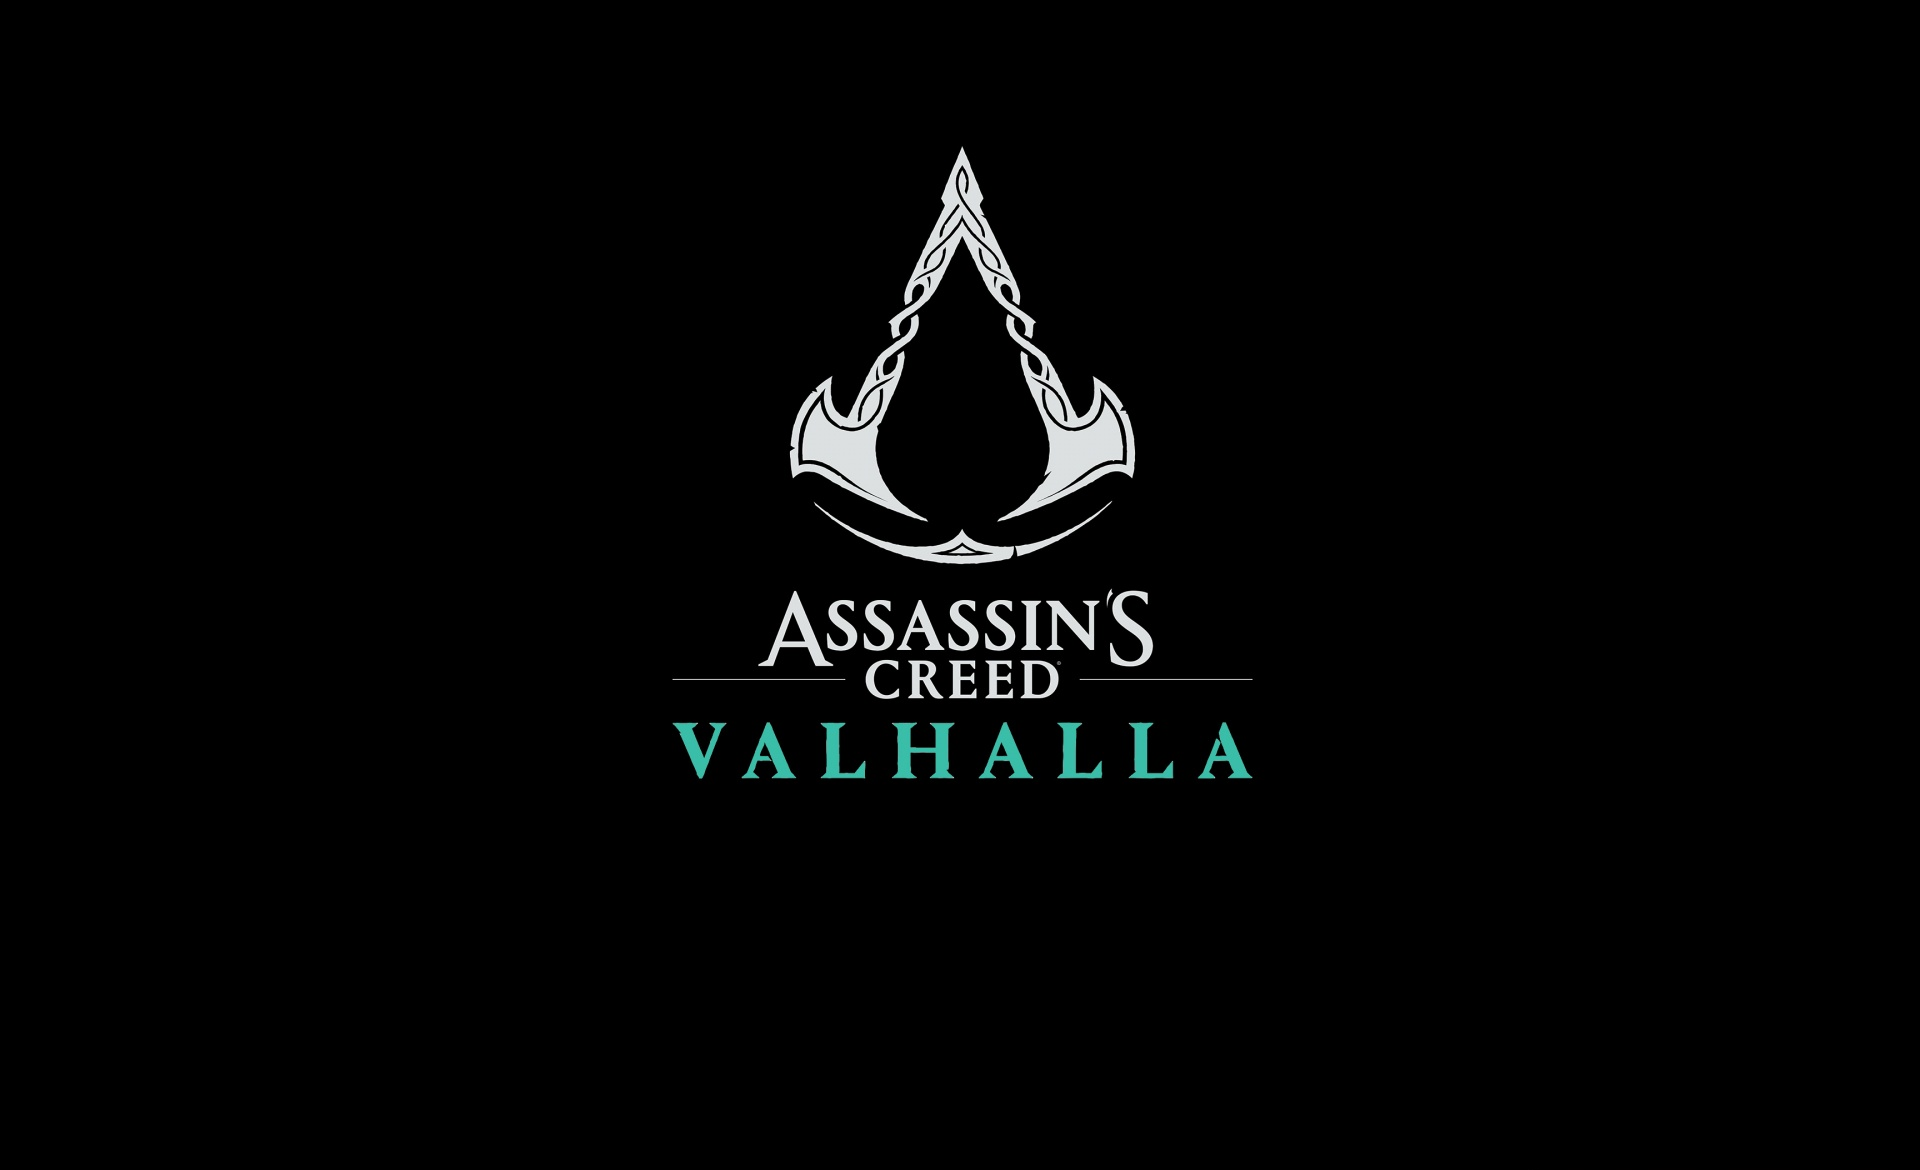 Assassin’s Creed வல்ஹல்லா அதன் முதல் வாரத்தில் வேறு எந்த கொலையாளியின் க்ரீட் விளையாட்டையும் விட அதிக அலகுகளை விற்றுள்ளது